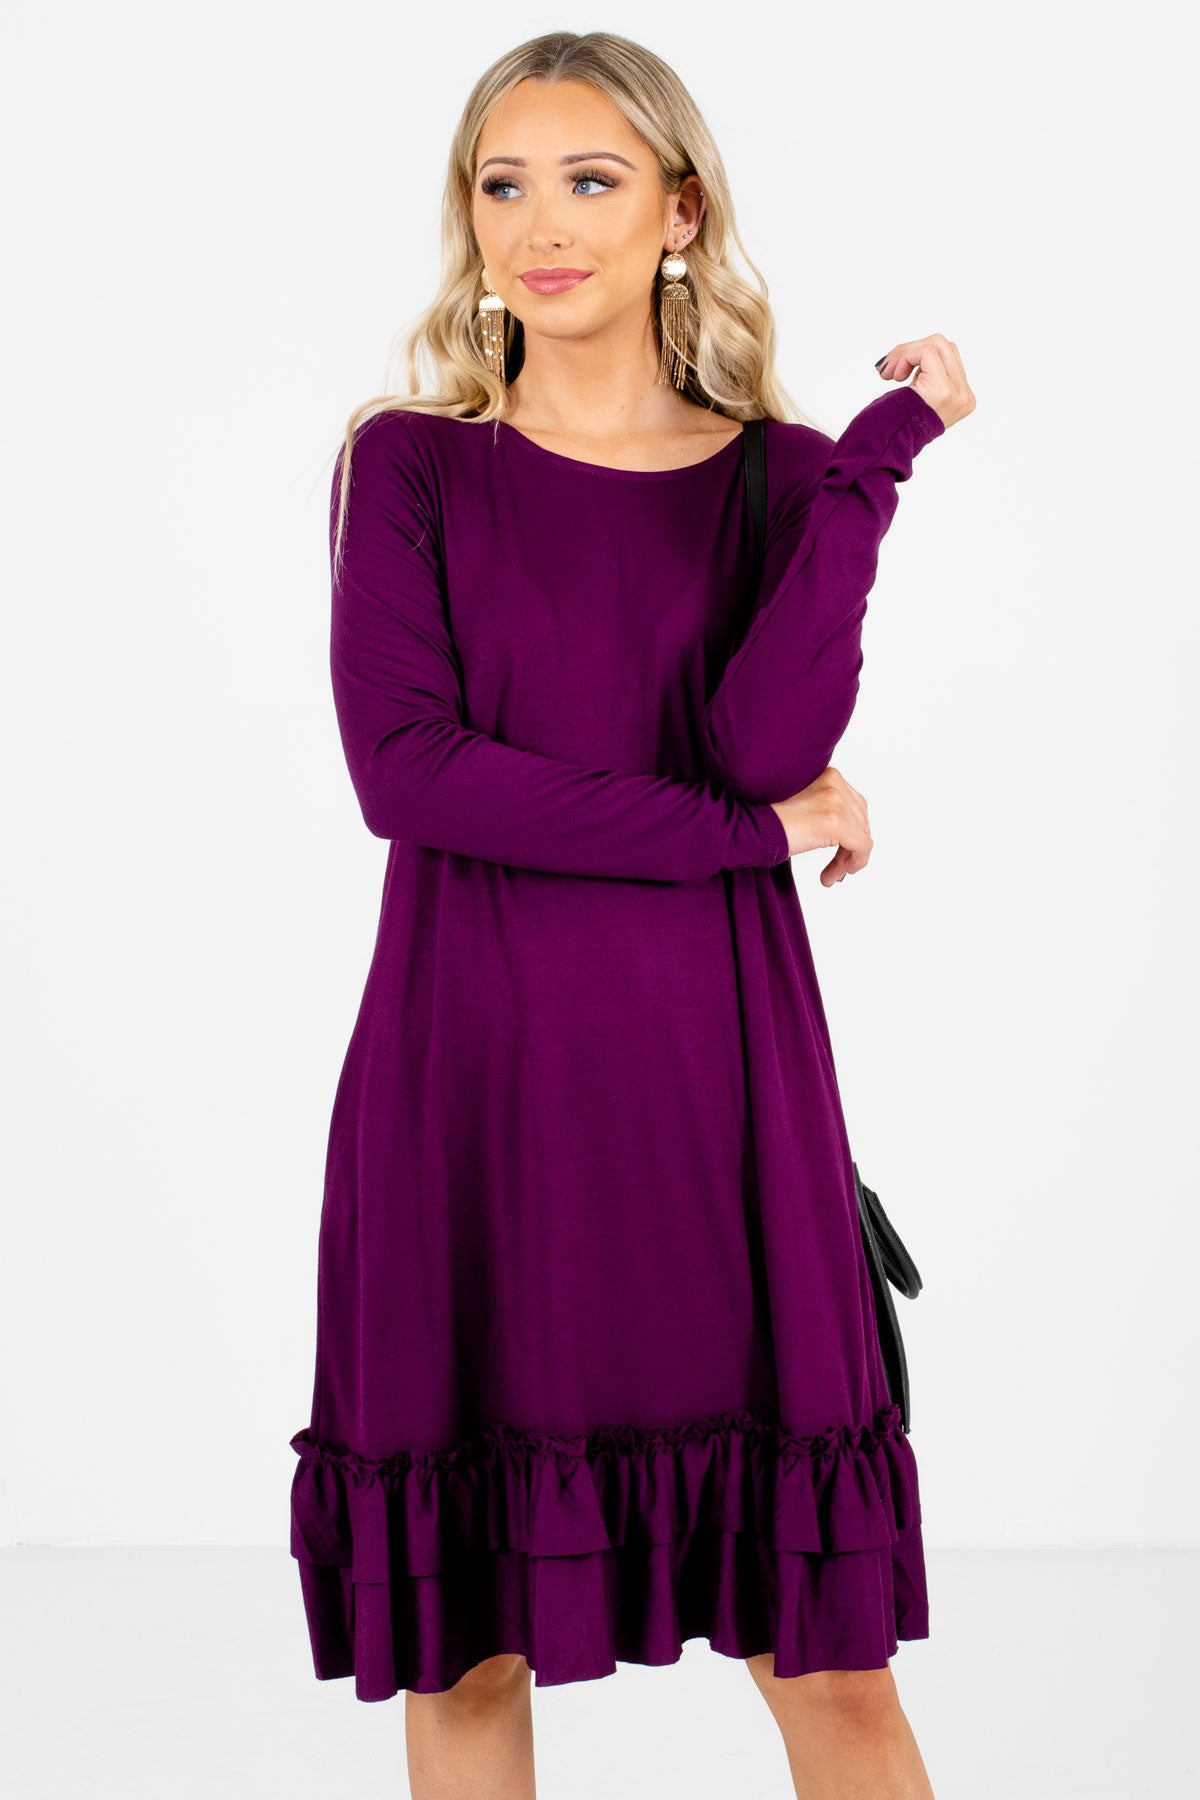 Purple Ruffled Hem Boutique Knee-Length Dresses for Women